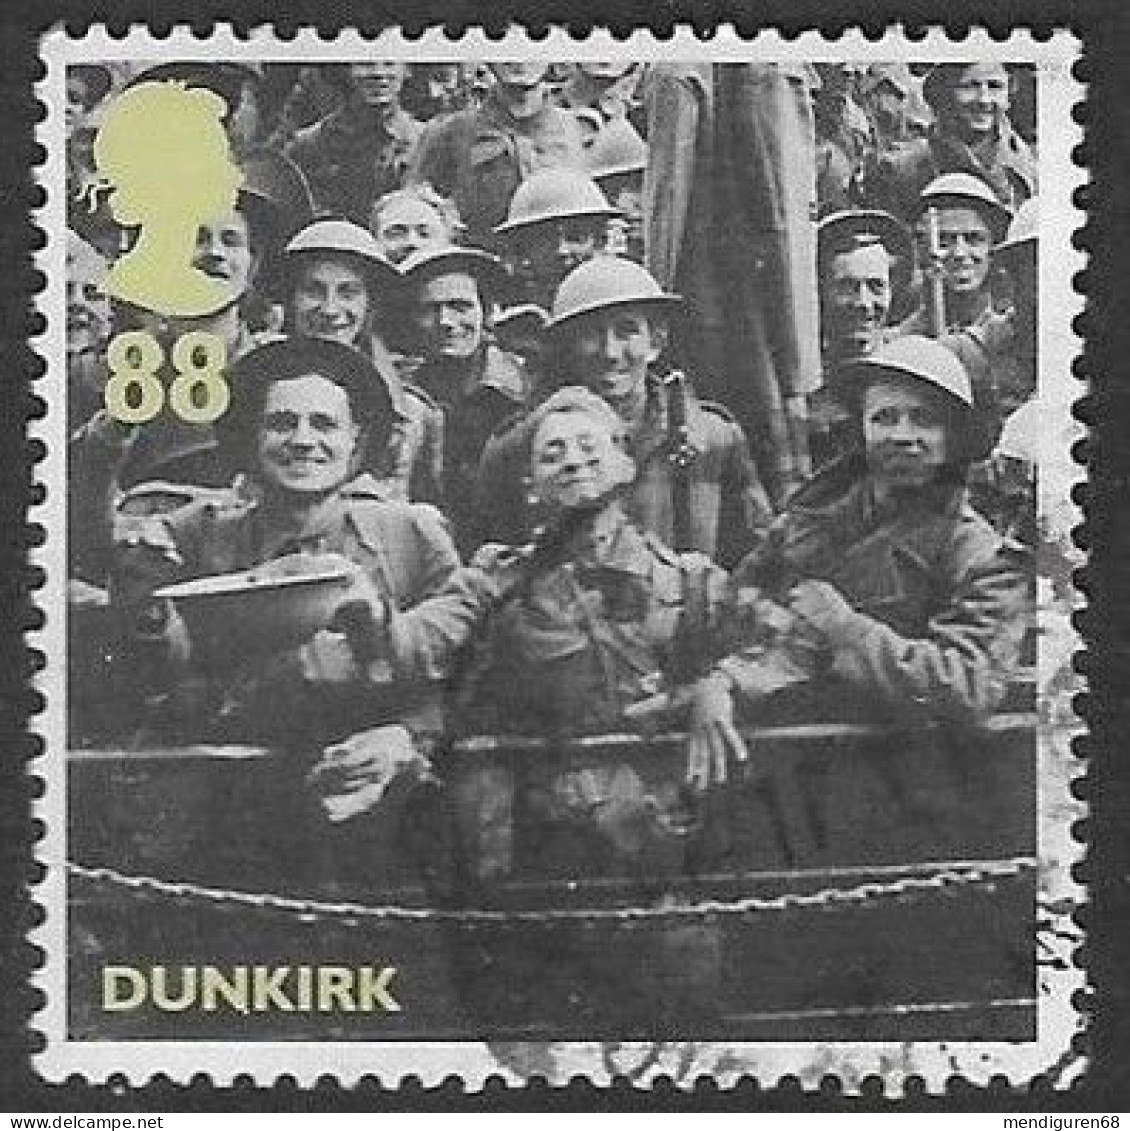 GROSSBRITANNIEN GRANDE BRETAGNE GB 2010 BRITAIN ALONE:DUNKIRK EVACUATION SOLDIERS 88P SG 3084 MI 2961 YT 3349 SC SH2806D - Used Stamps